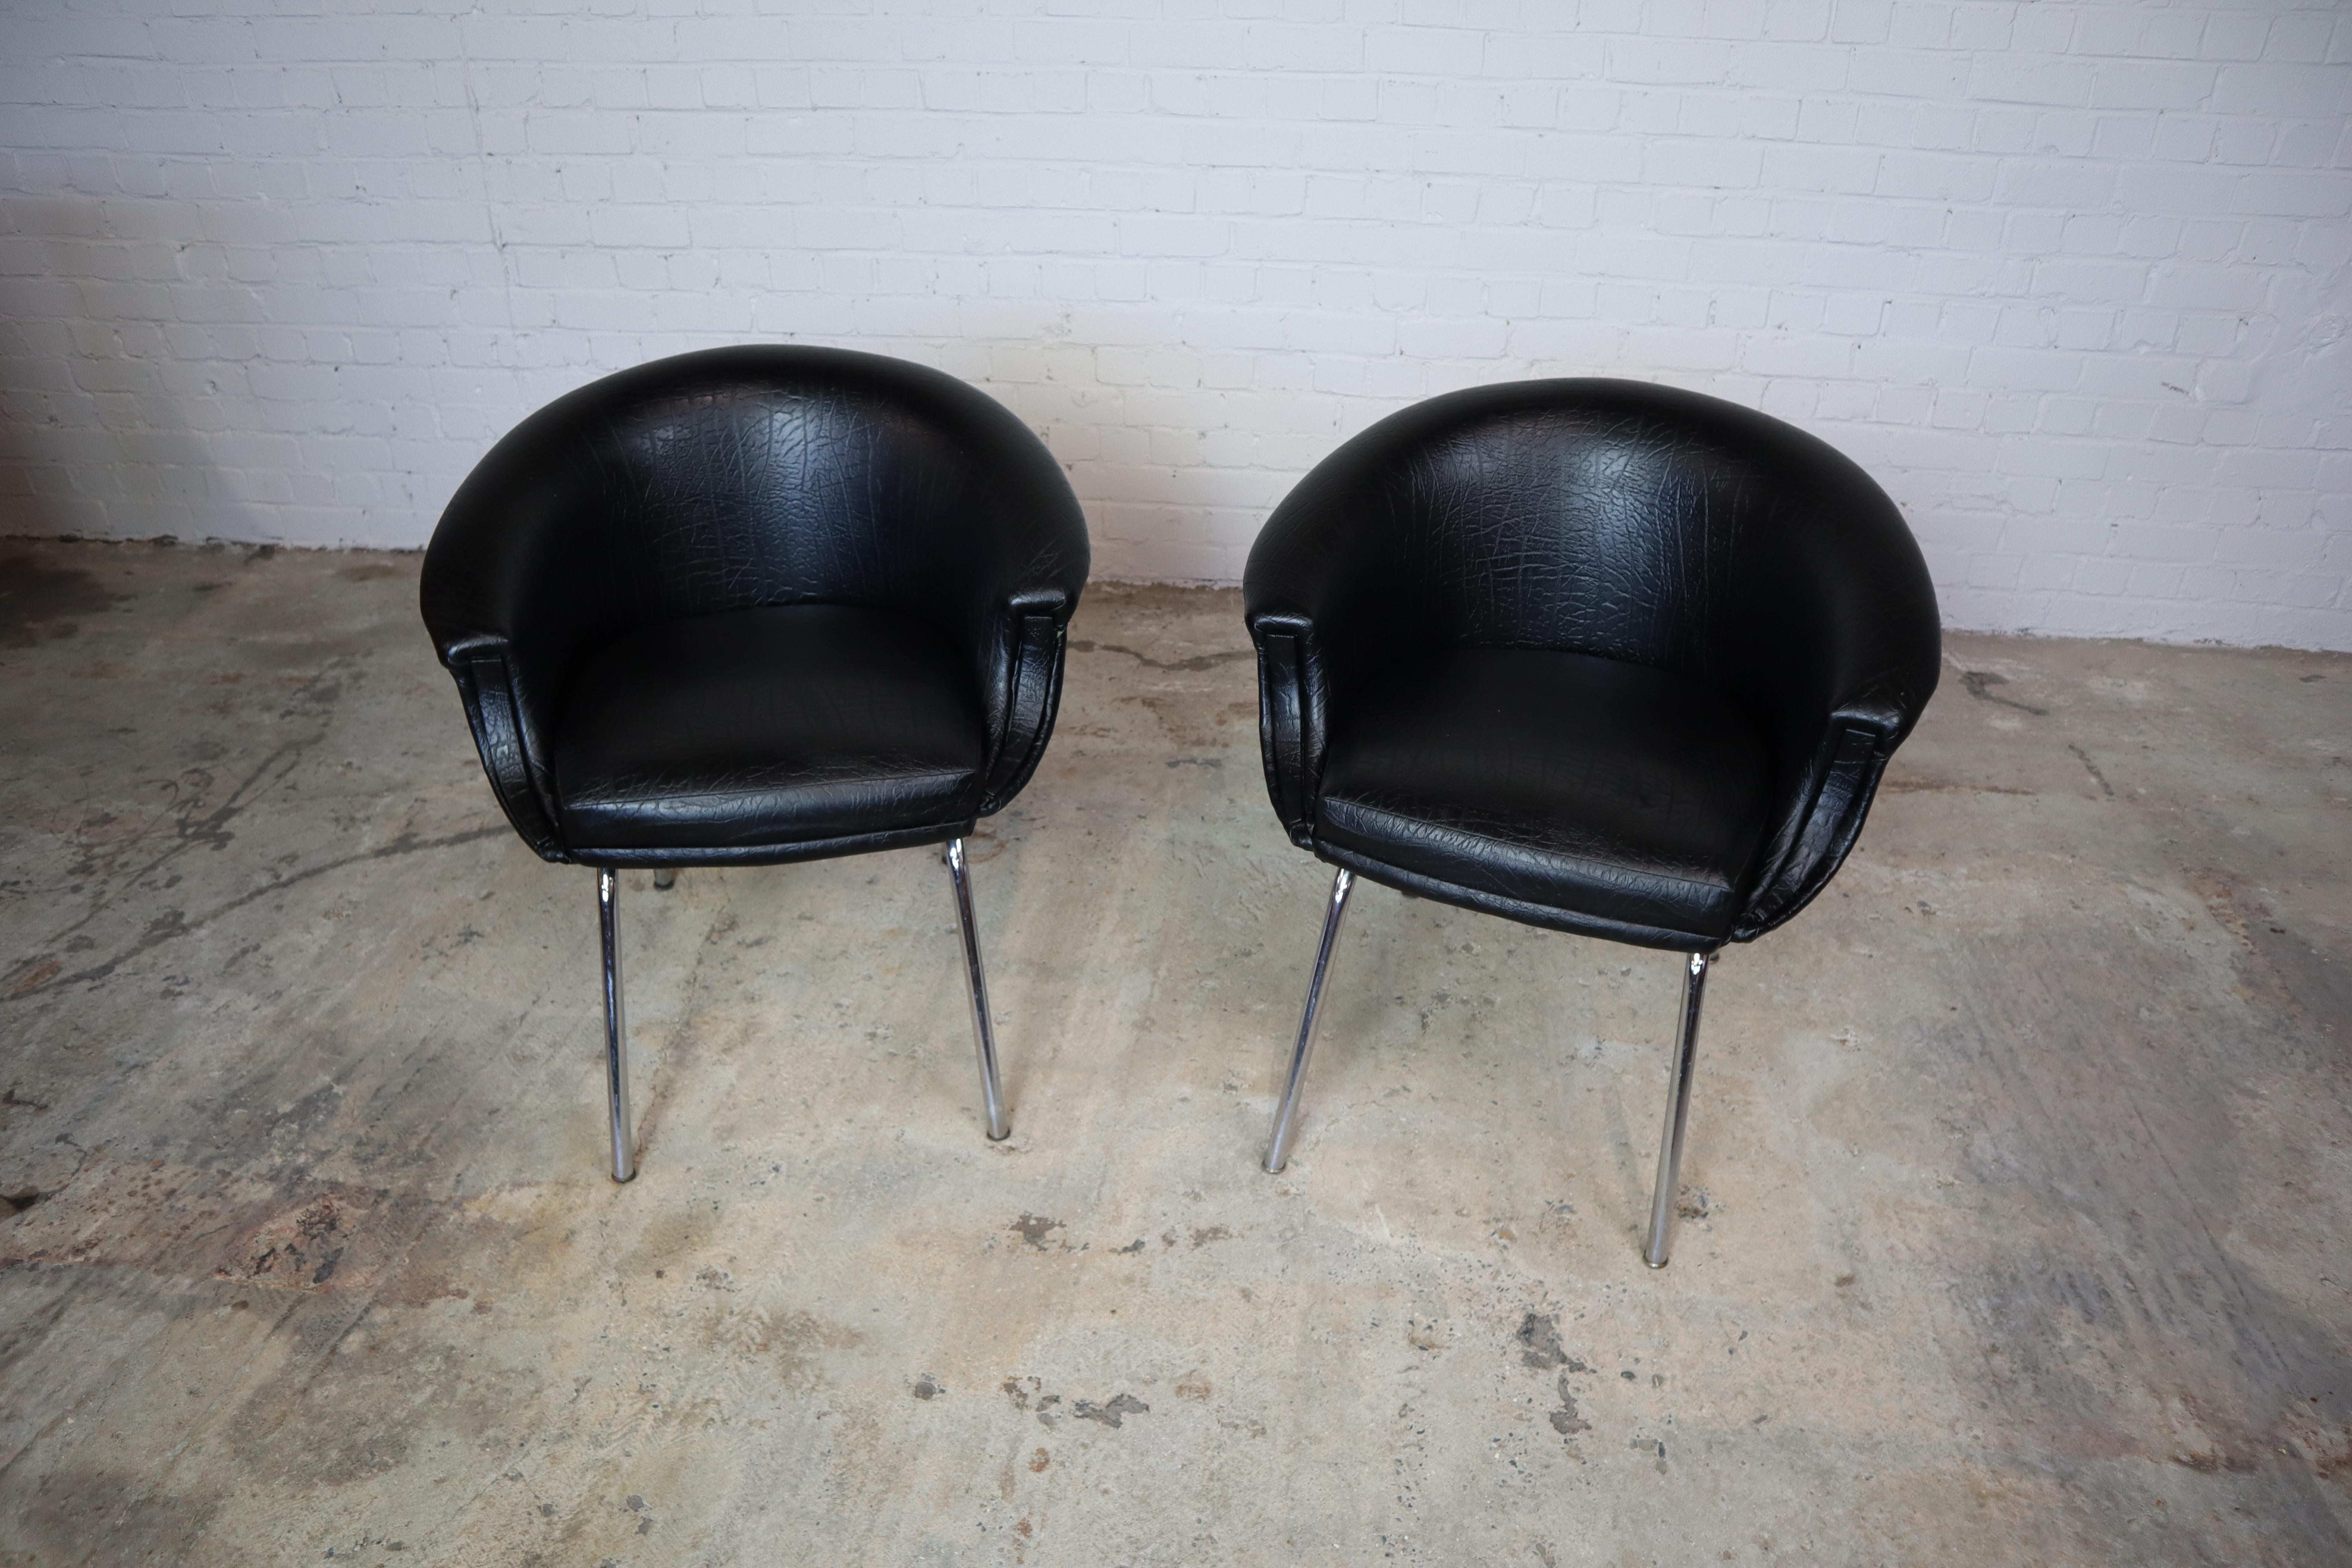 Fantastic pair of black curvy armchairs!